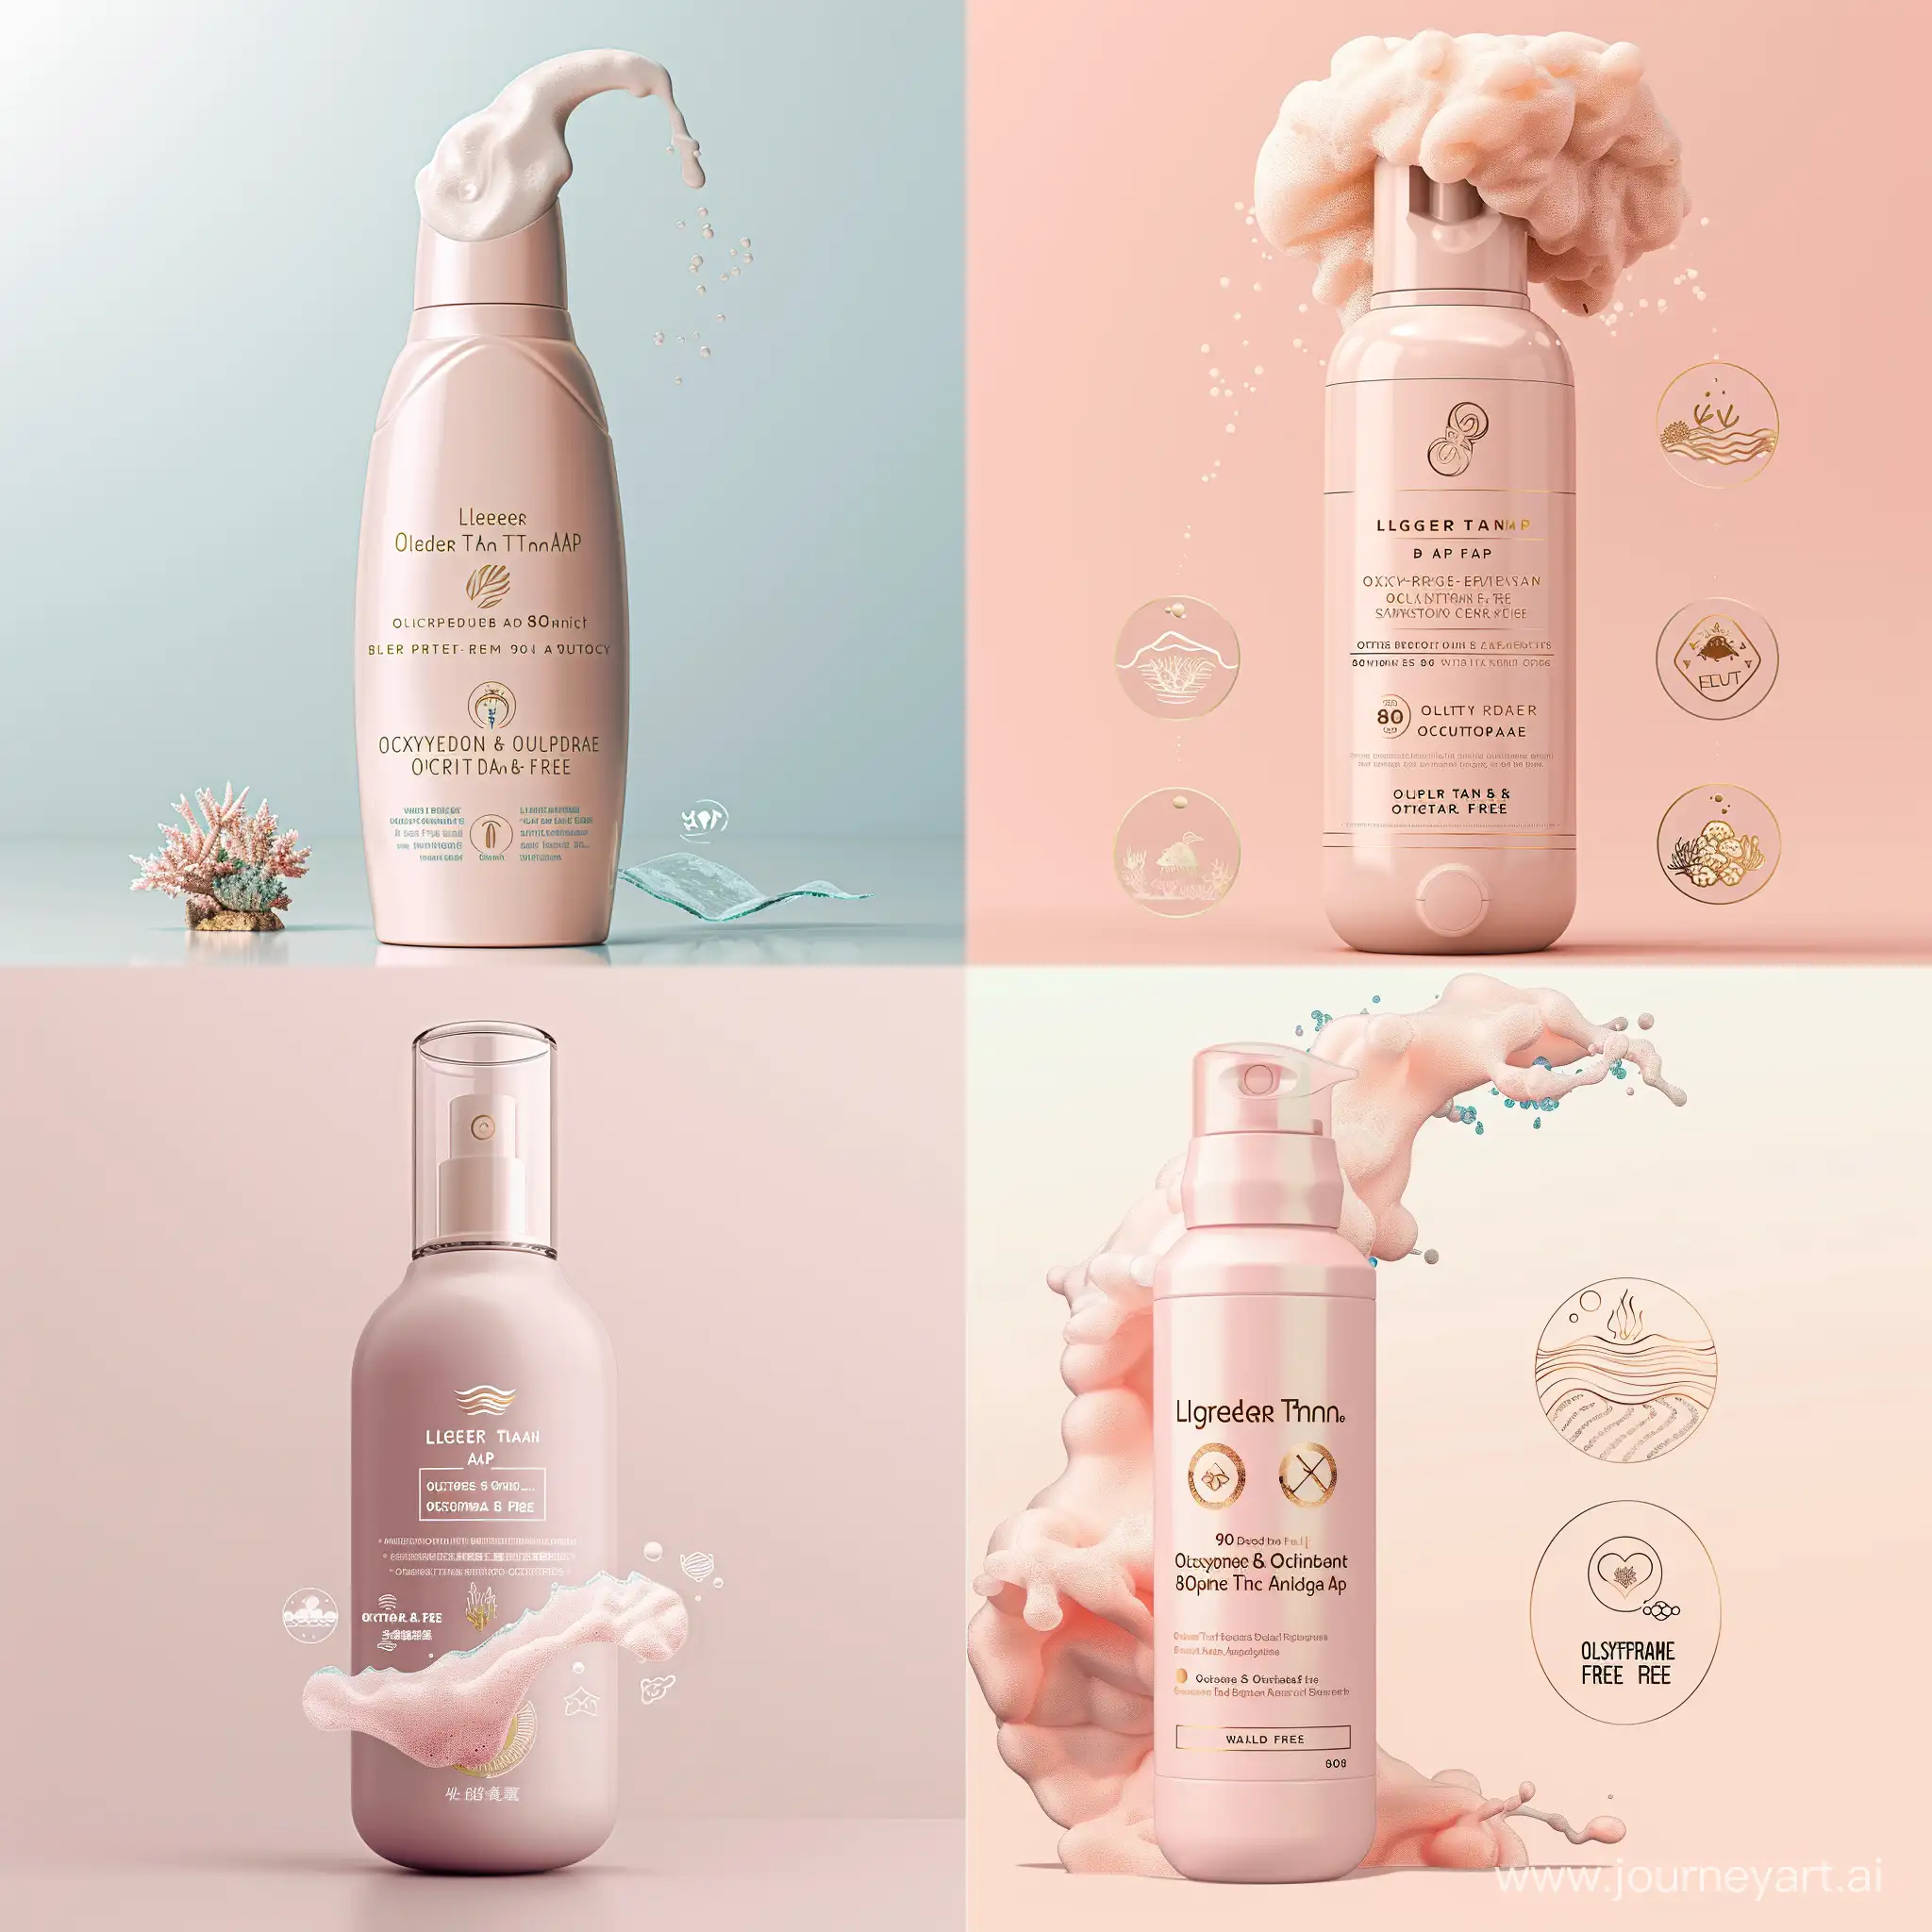 Luxurious-LighterThanAir-Baby-Pink-Sunscreen-Bottle-with-EcoFriendly-Vegan-and-CrueltyFree-Attributes